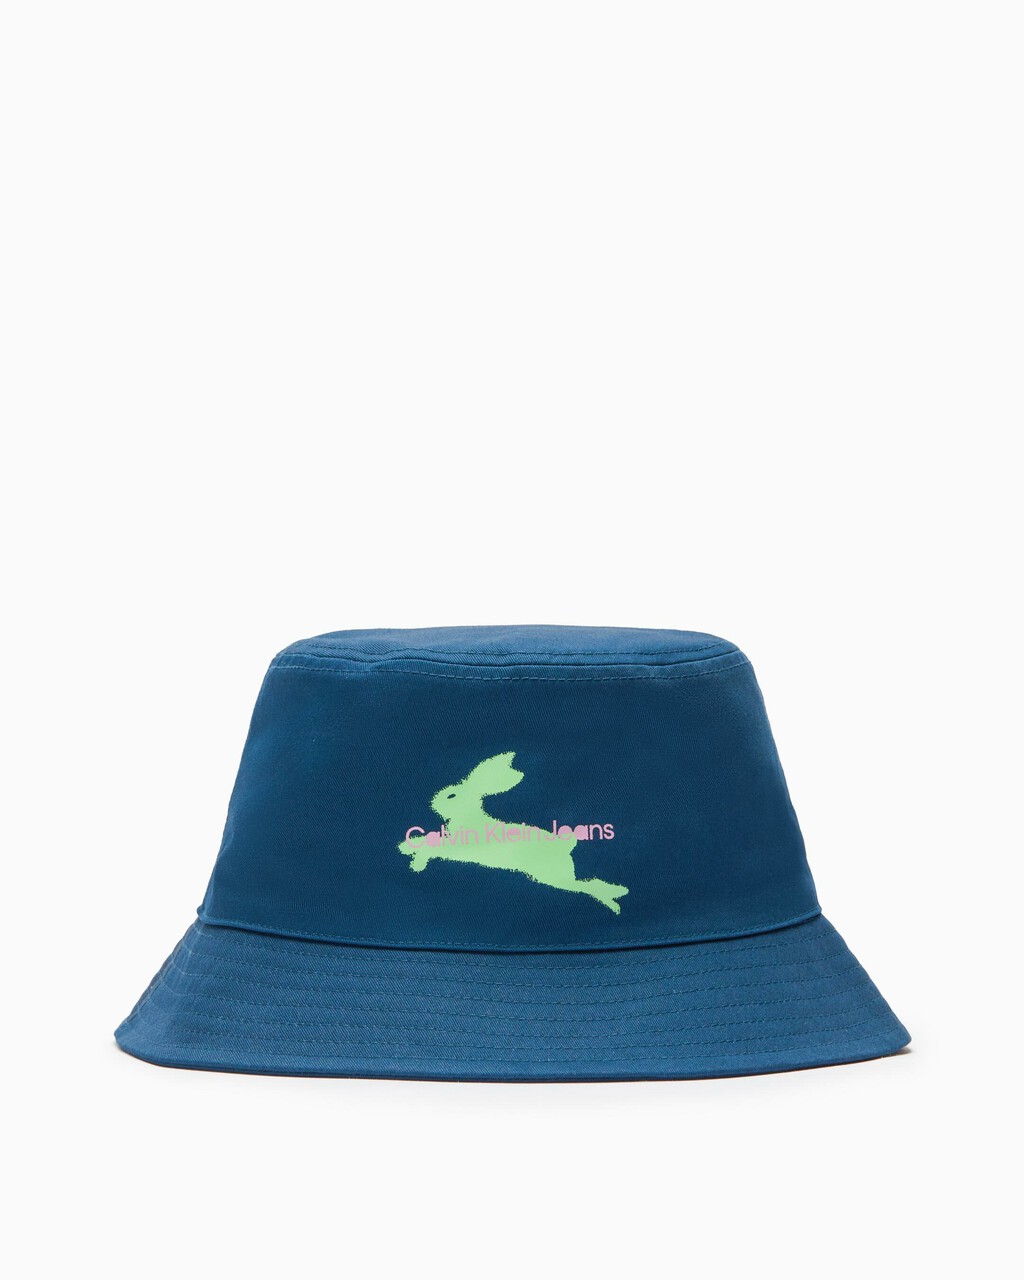 兔年特別版雙面漁夫帽, GIBRALTAR SEA, hi-res